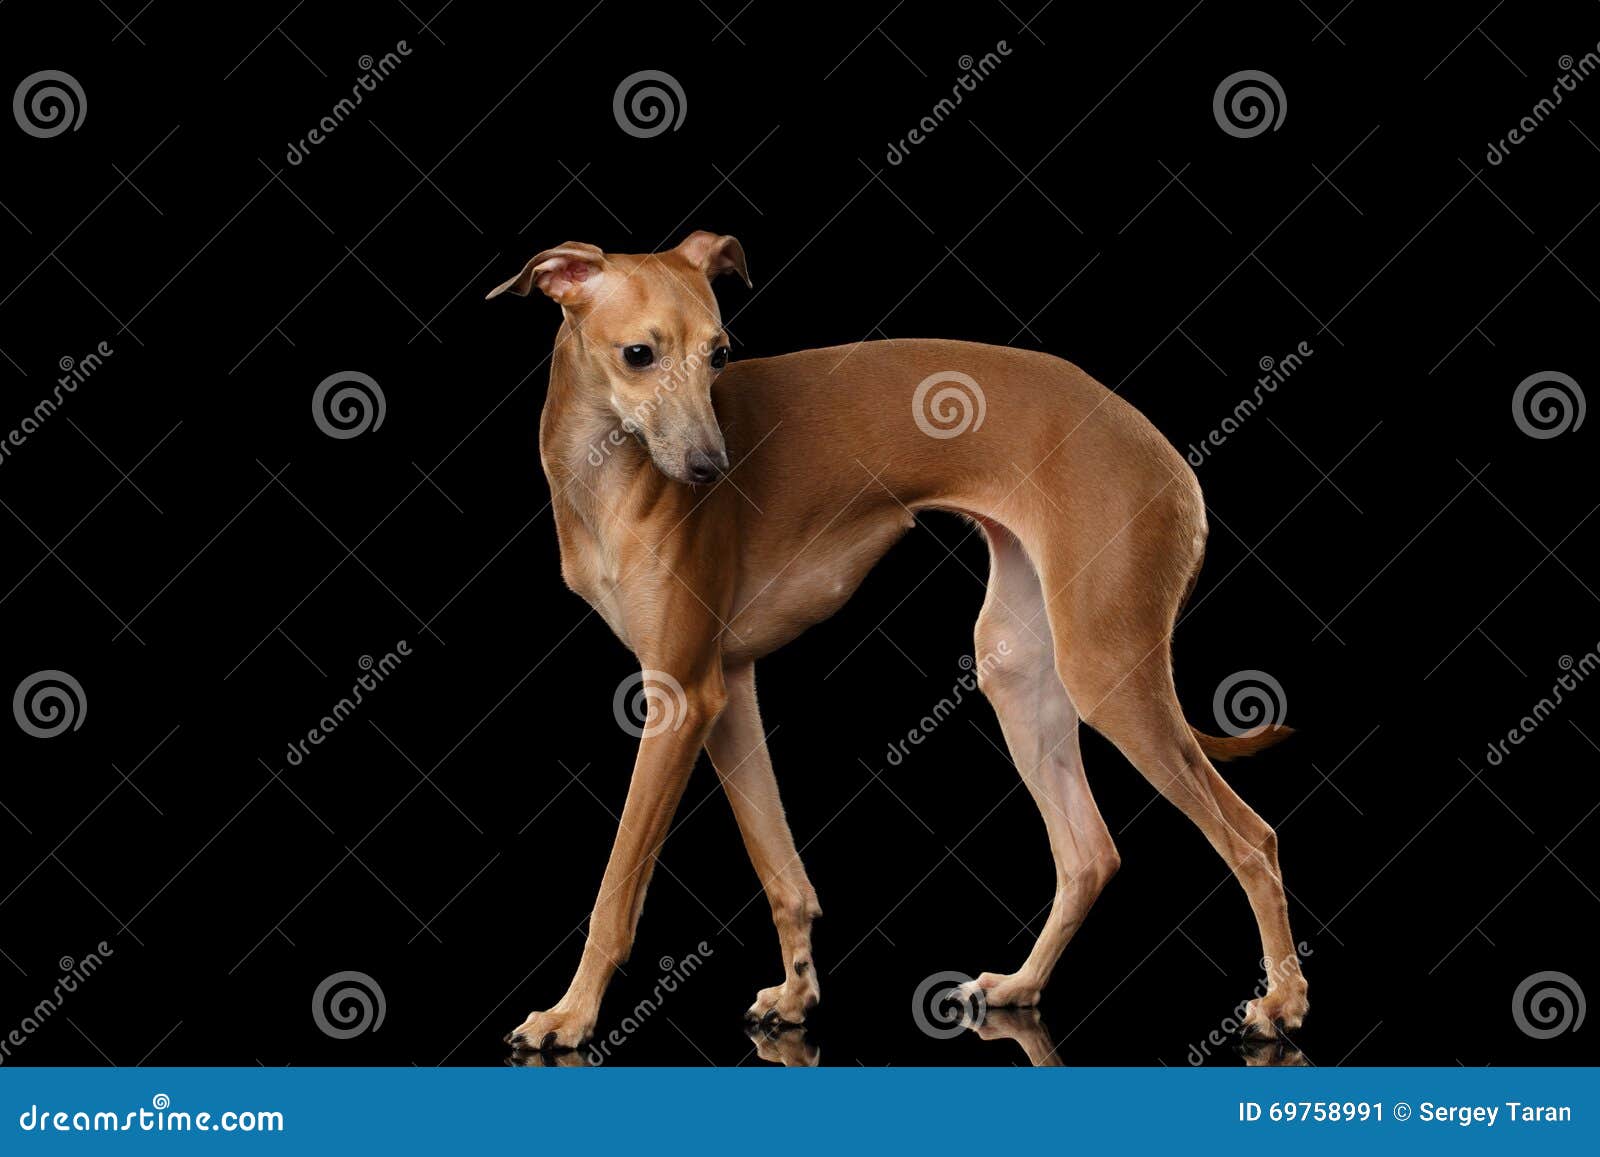 italian greyhound dog standing on mirror, posing profile  black